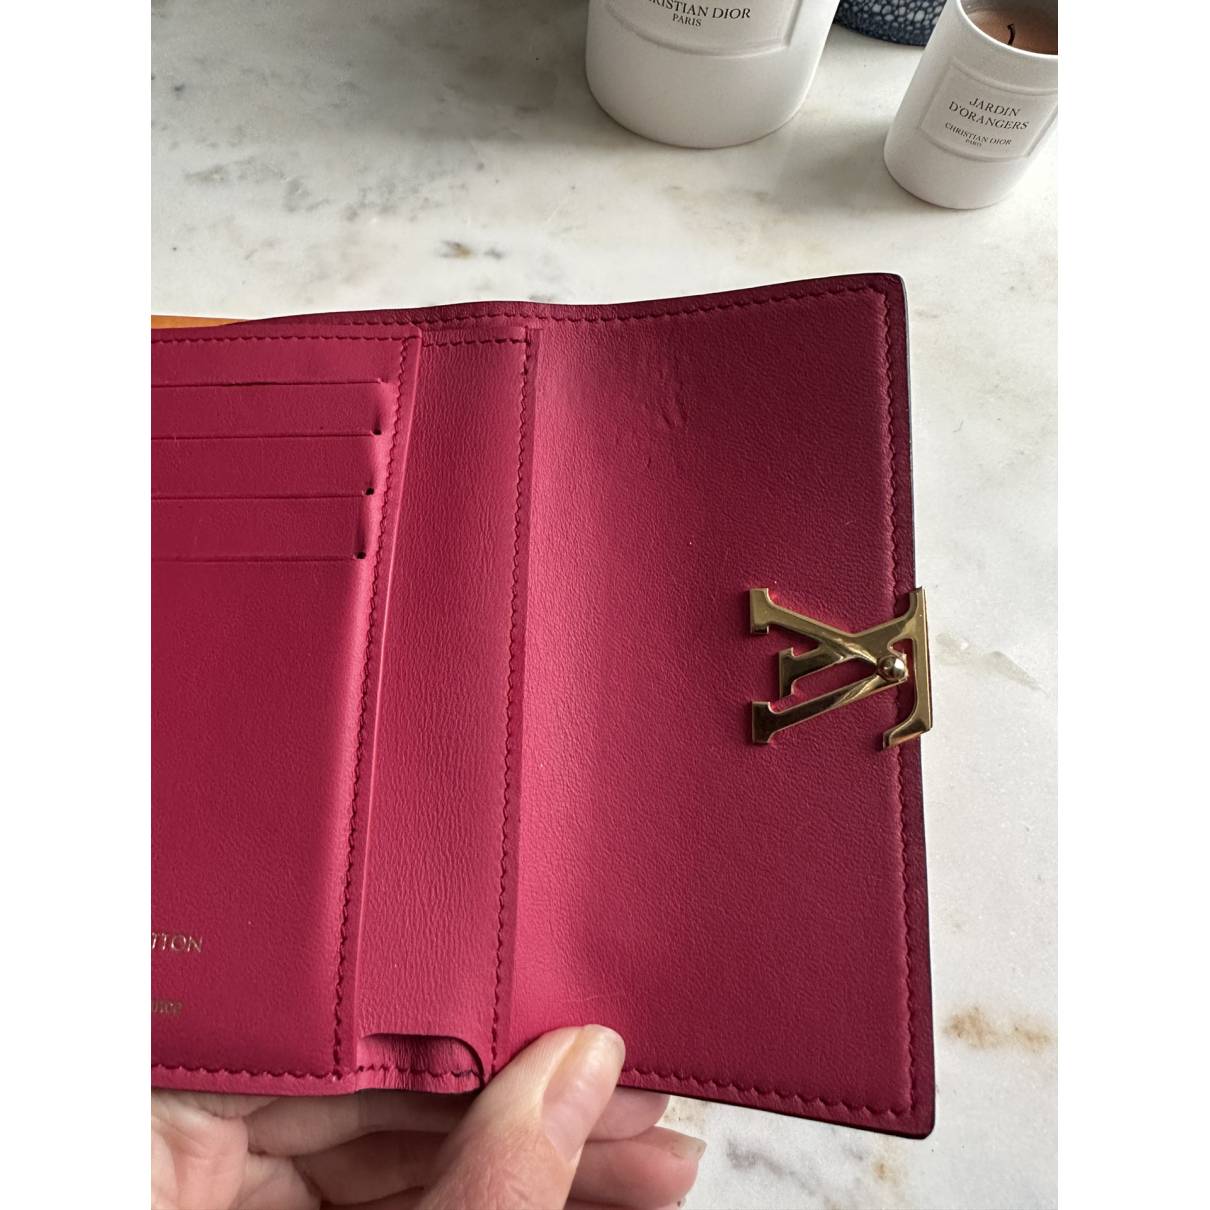 LOUIS VUITTON Capucines Compact Wallet Black Pink Taurillon